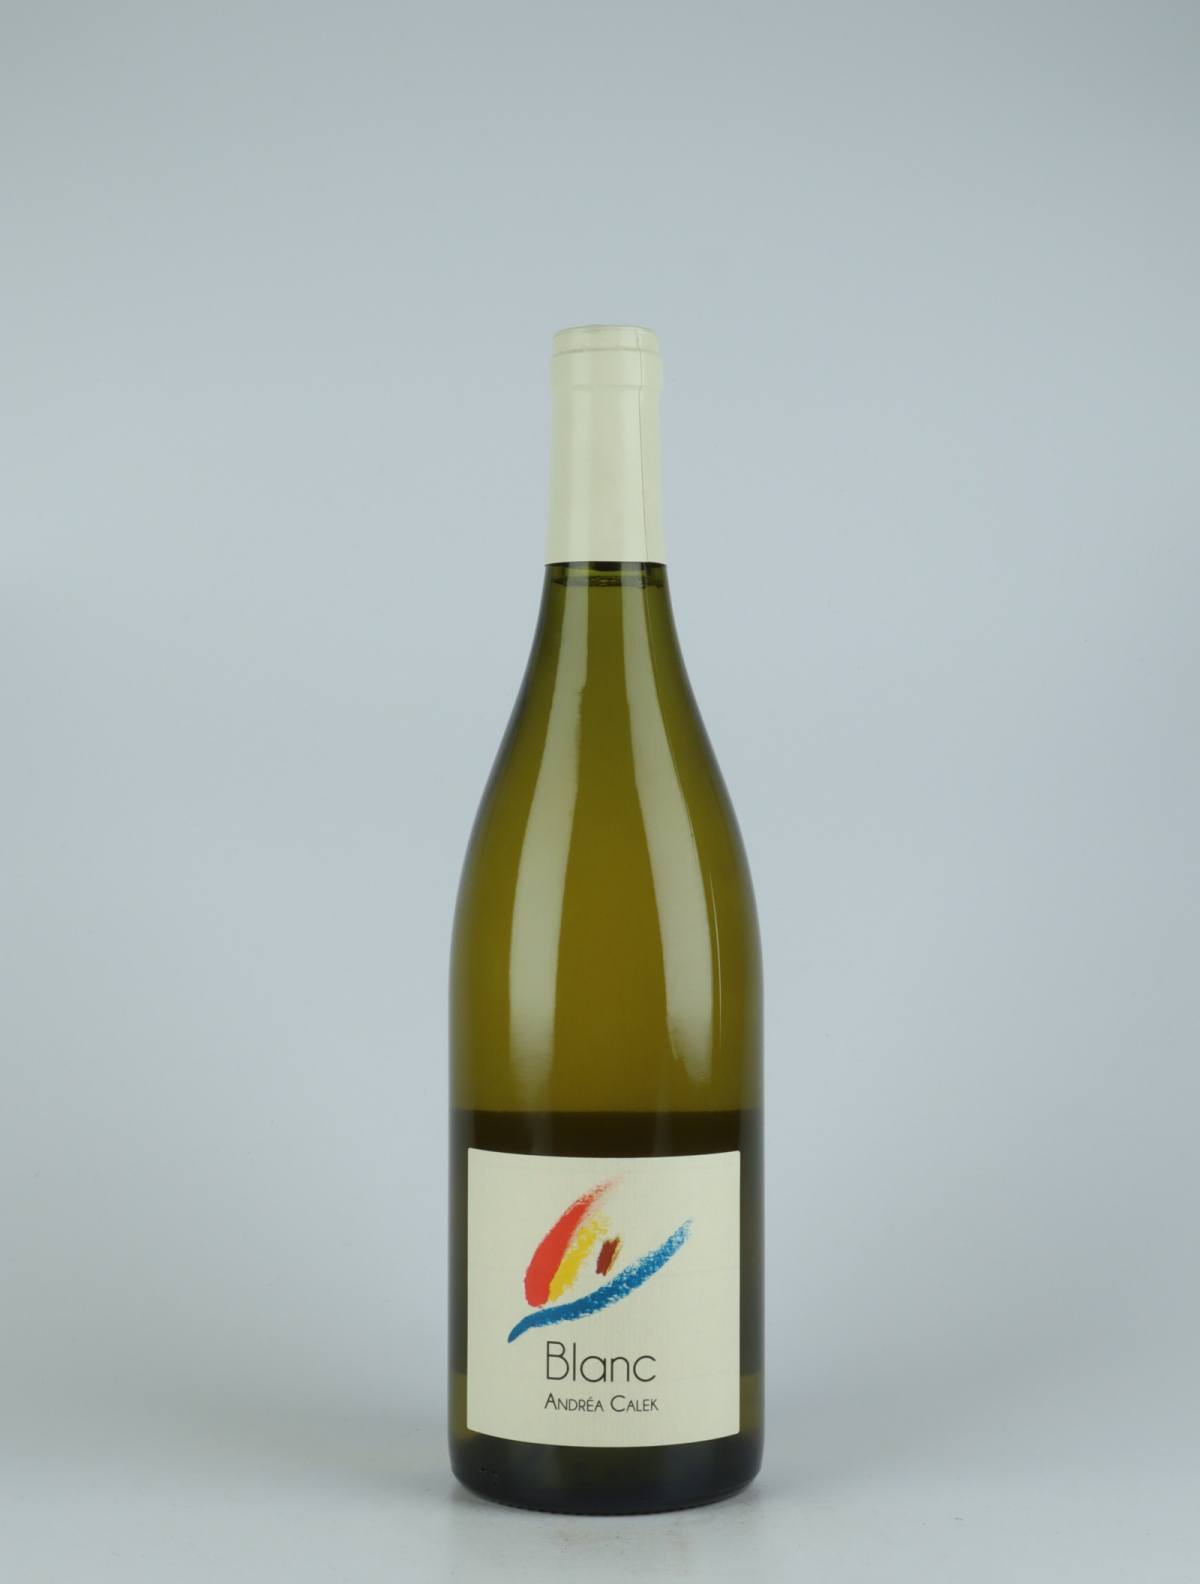 A bottle 2015 Blanc White wine from Andrea Calek, Ardèche in France